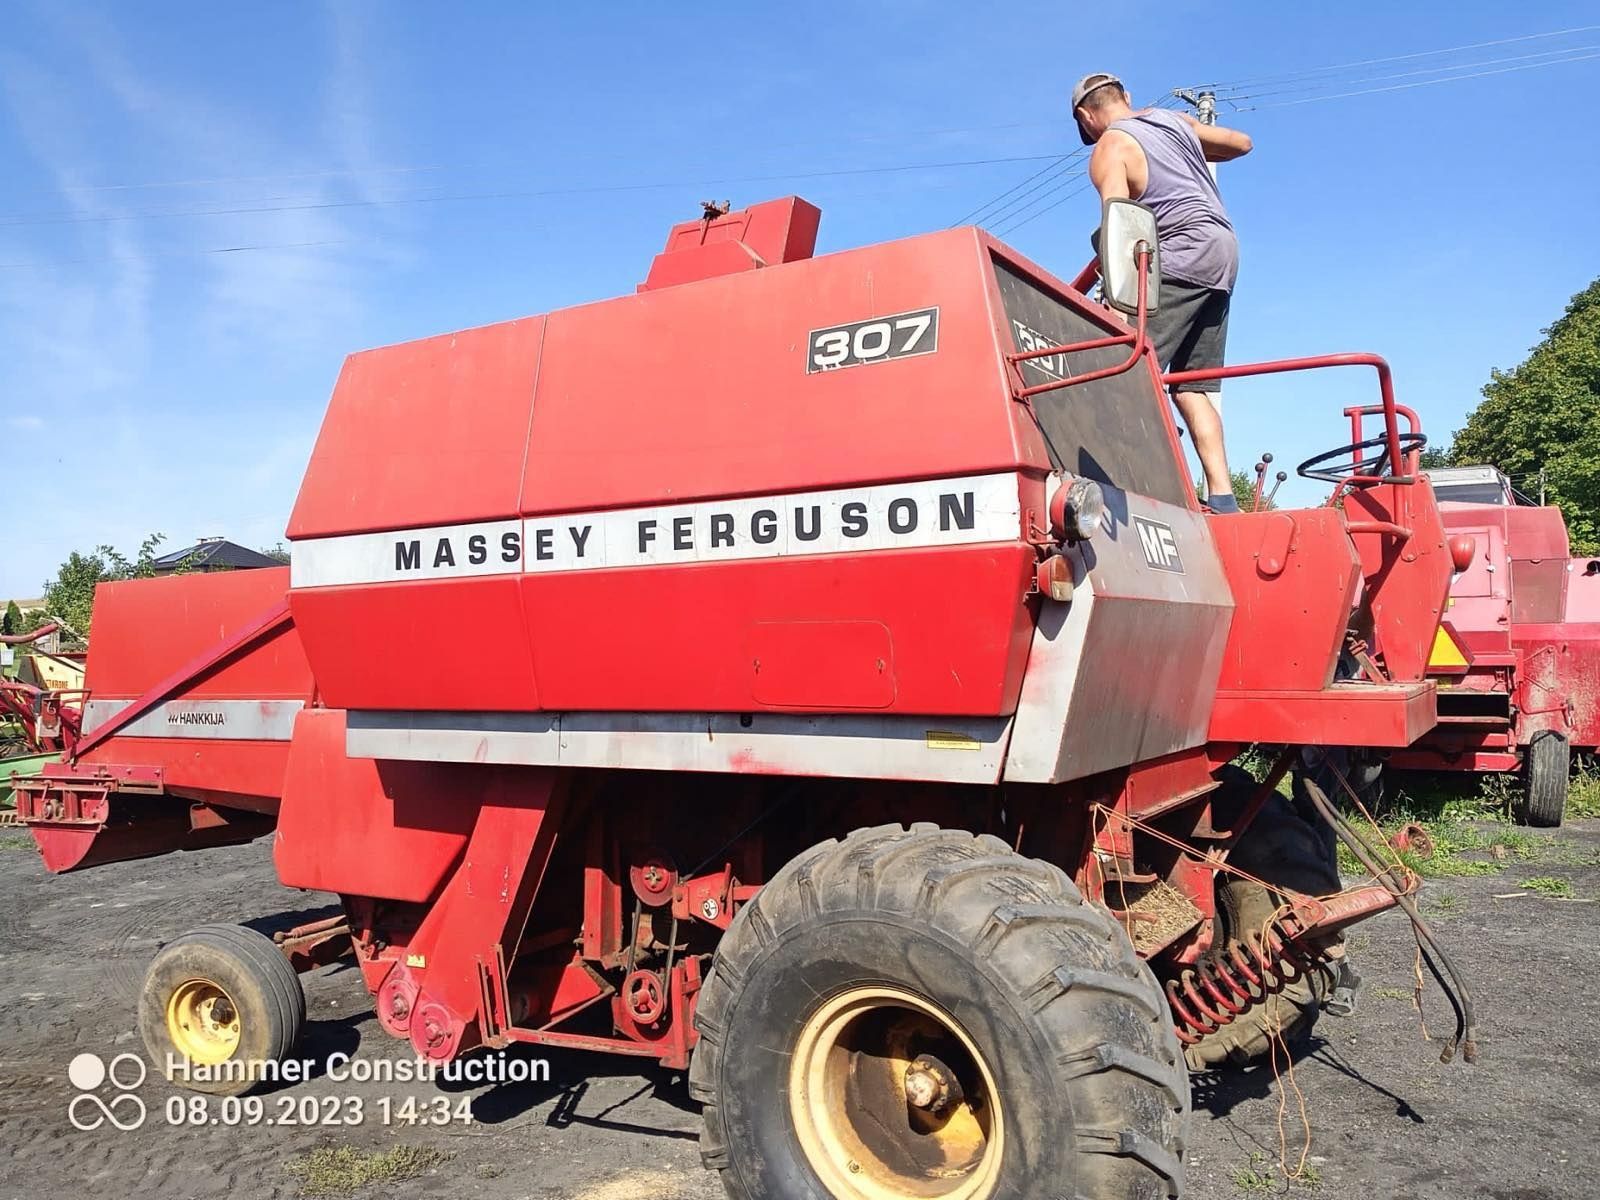 Massey Ferguson 307